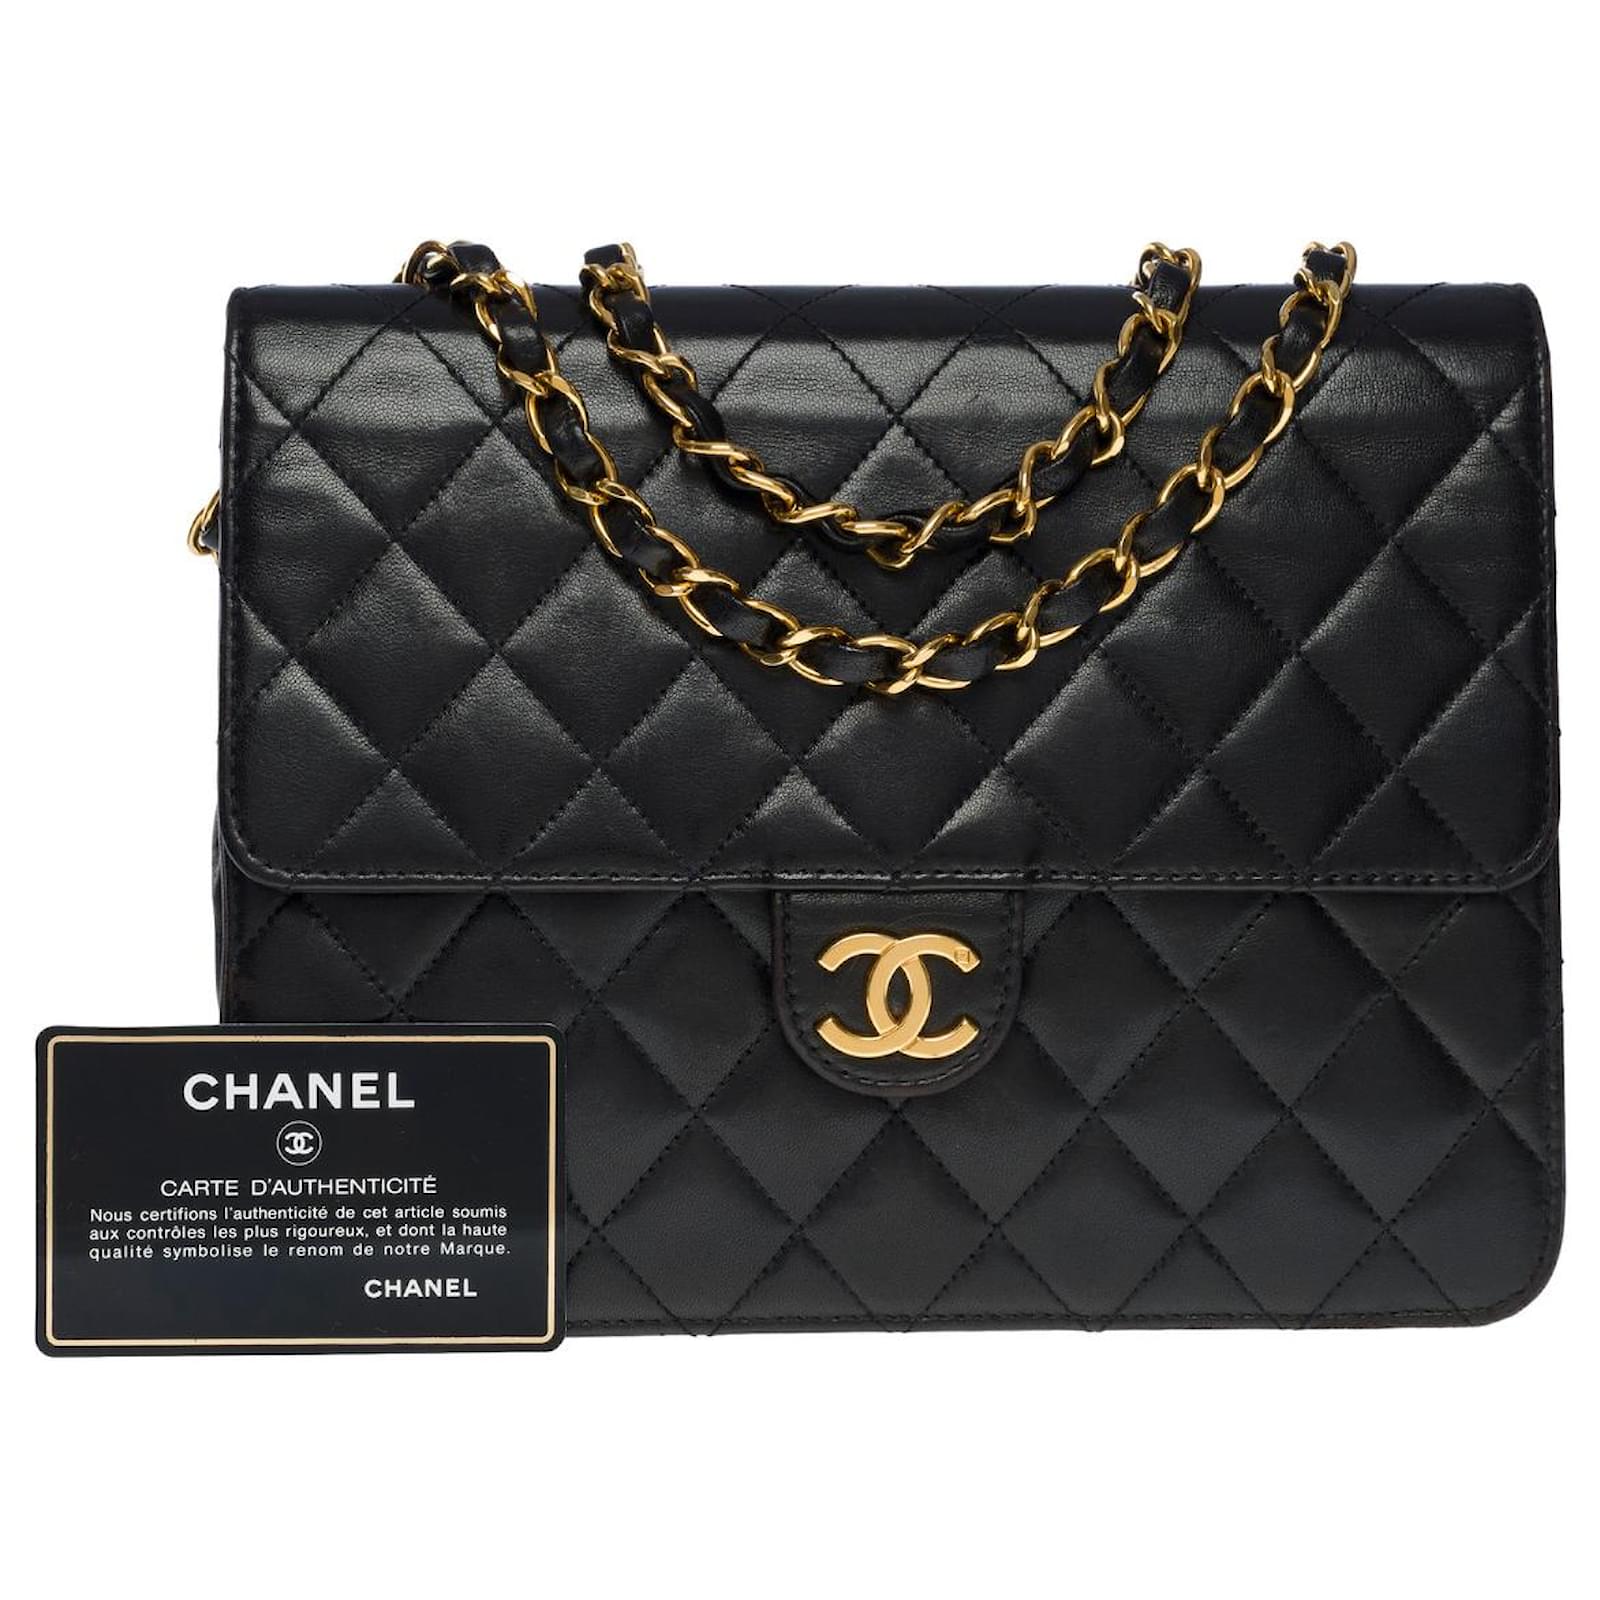 Chanel Classic Flap Runway Square Mini Pearl Crush Black Lambskin Leather  Cross Body Bag #chanel #cross #…